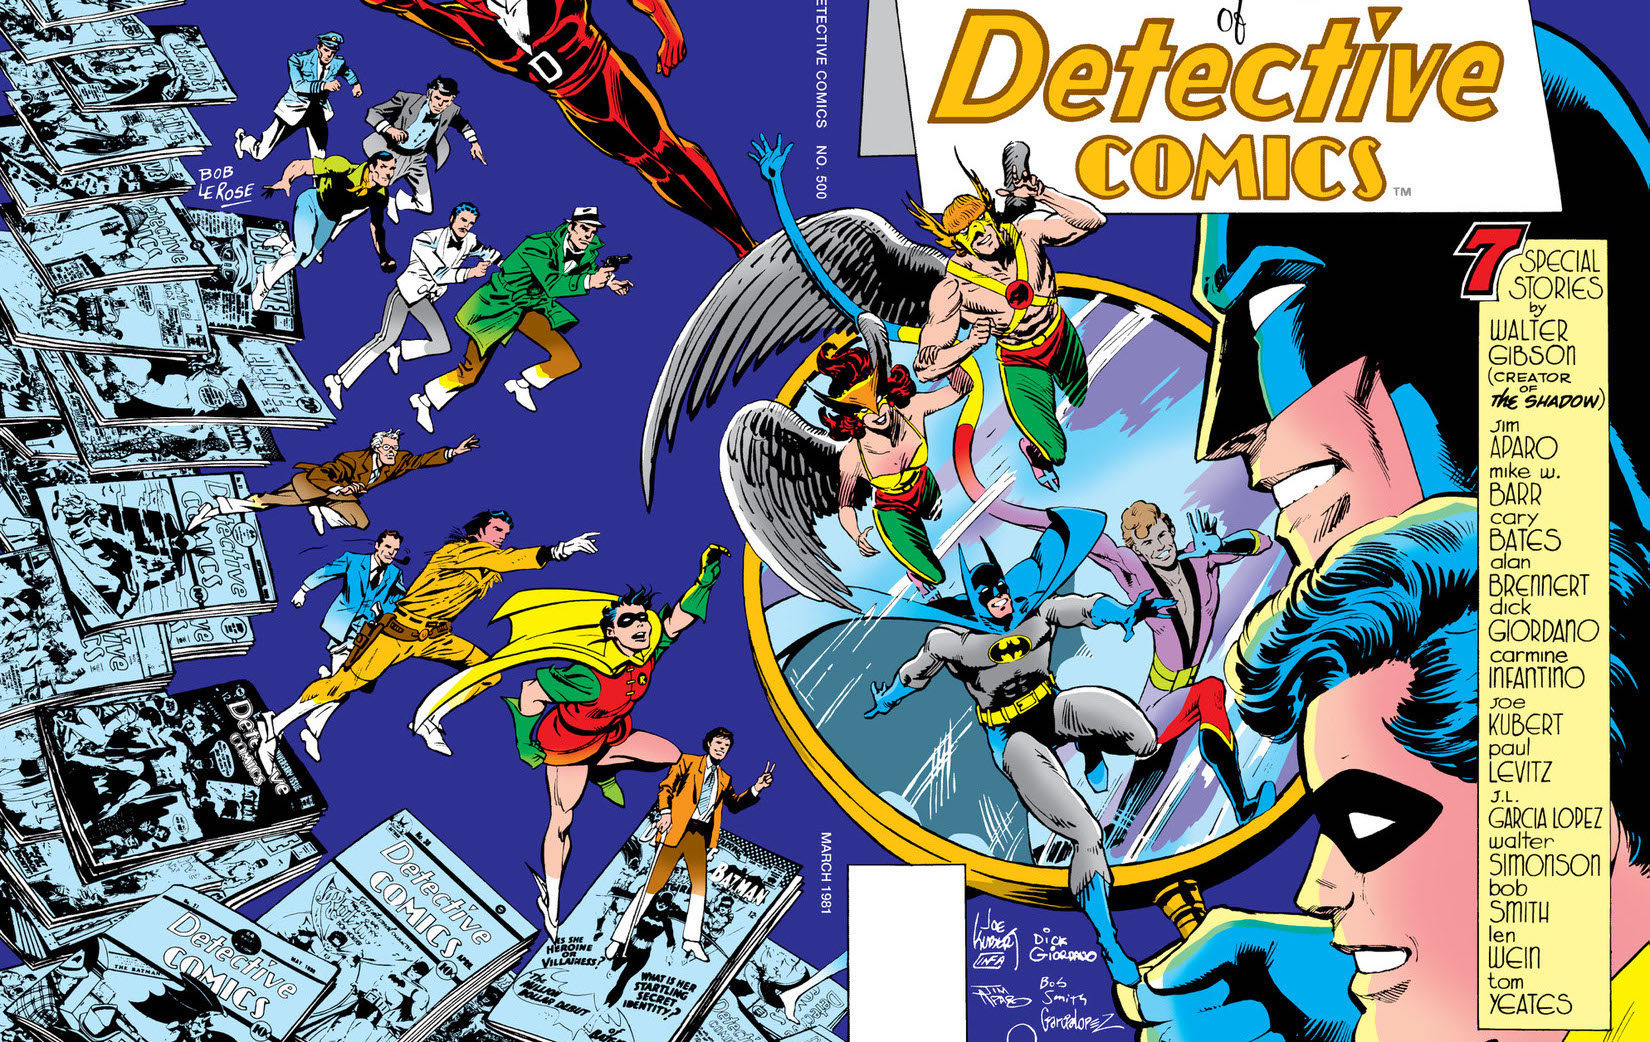 PAUL LEVITZ: We Went 'All Out' For DETECTIVE COMICS #500 | 13th Dimension,  Comics, Creators, Culture